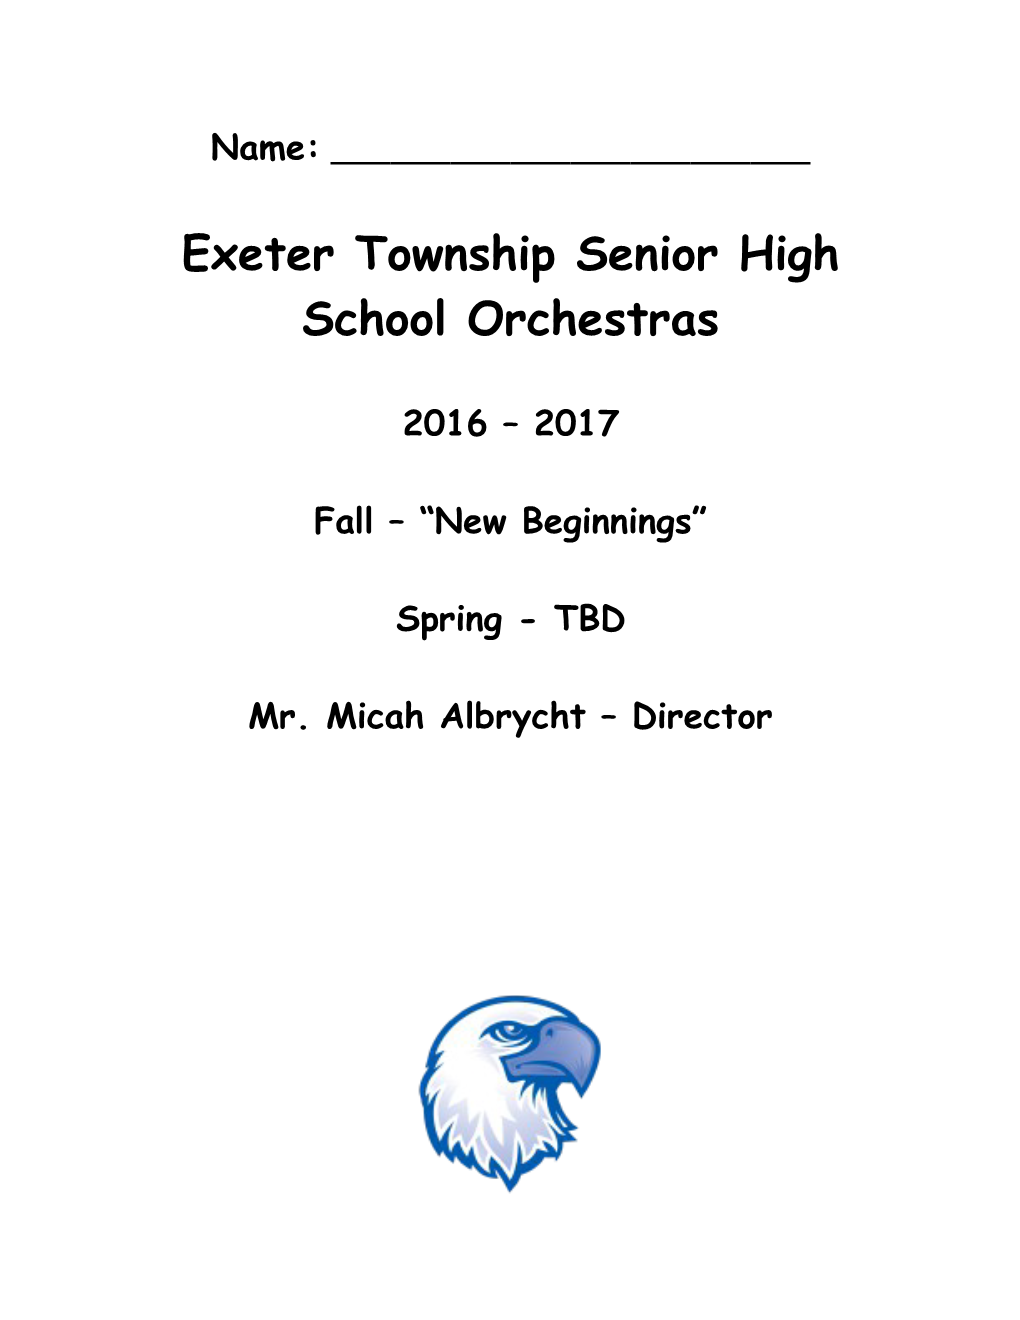 Exeter Township Senior High School Orchestras